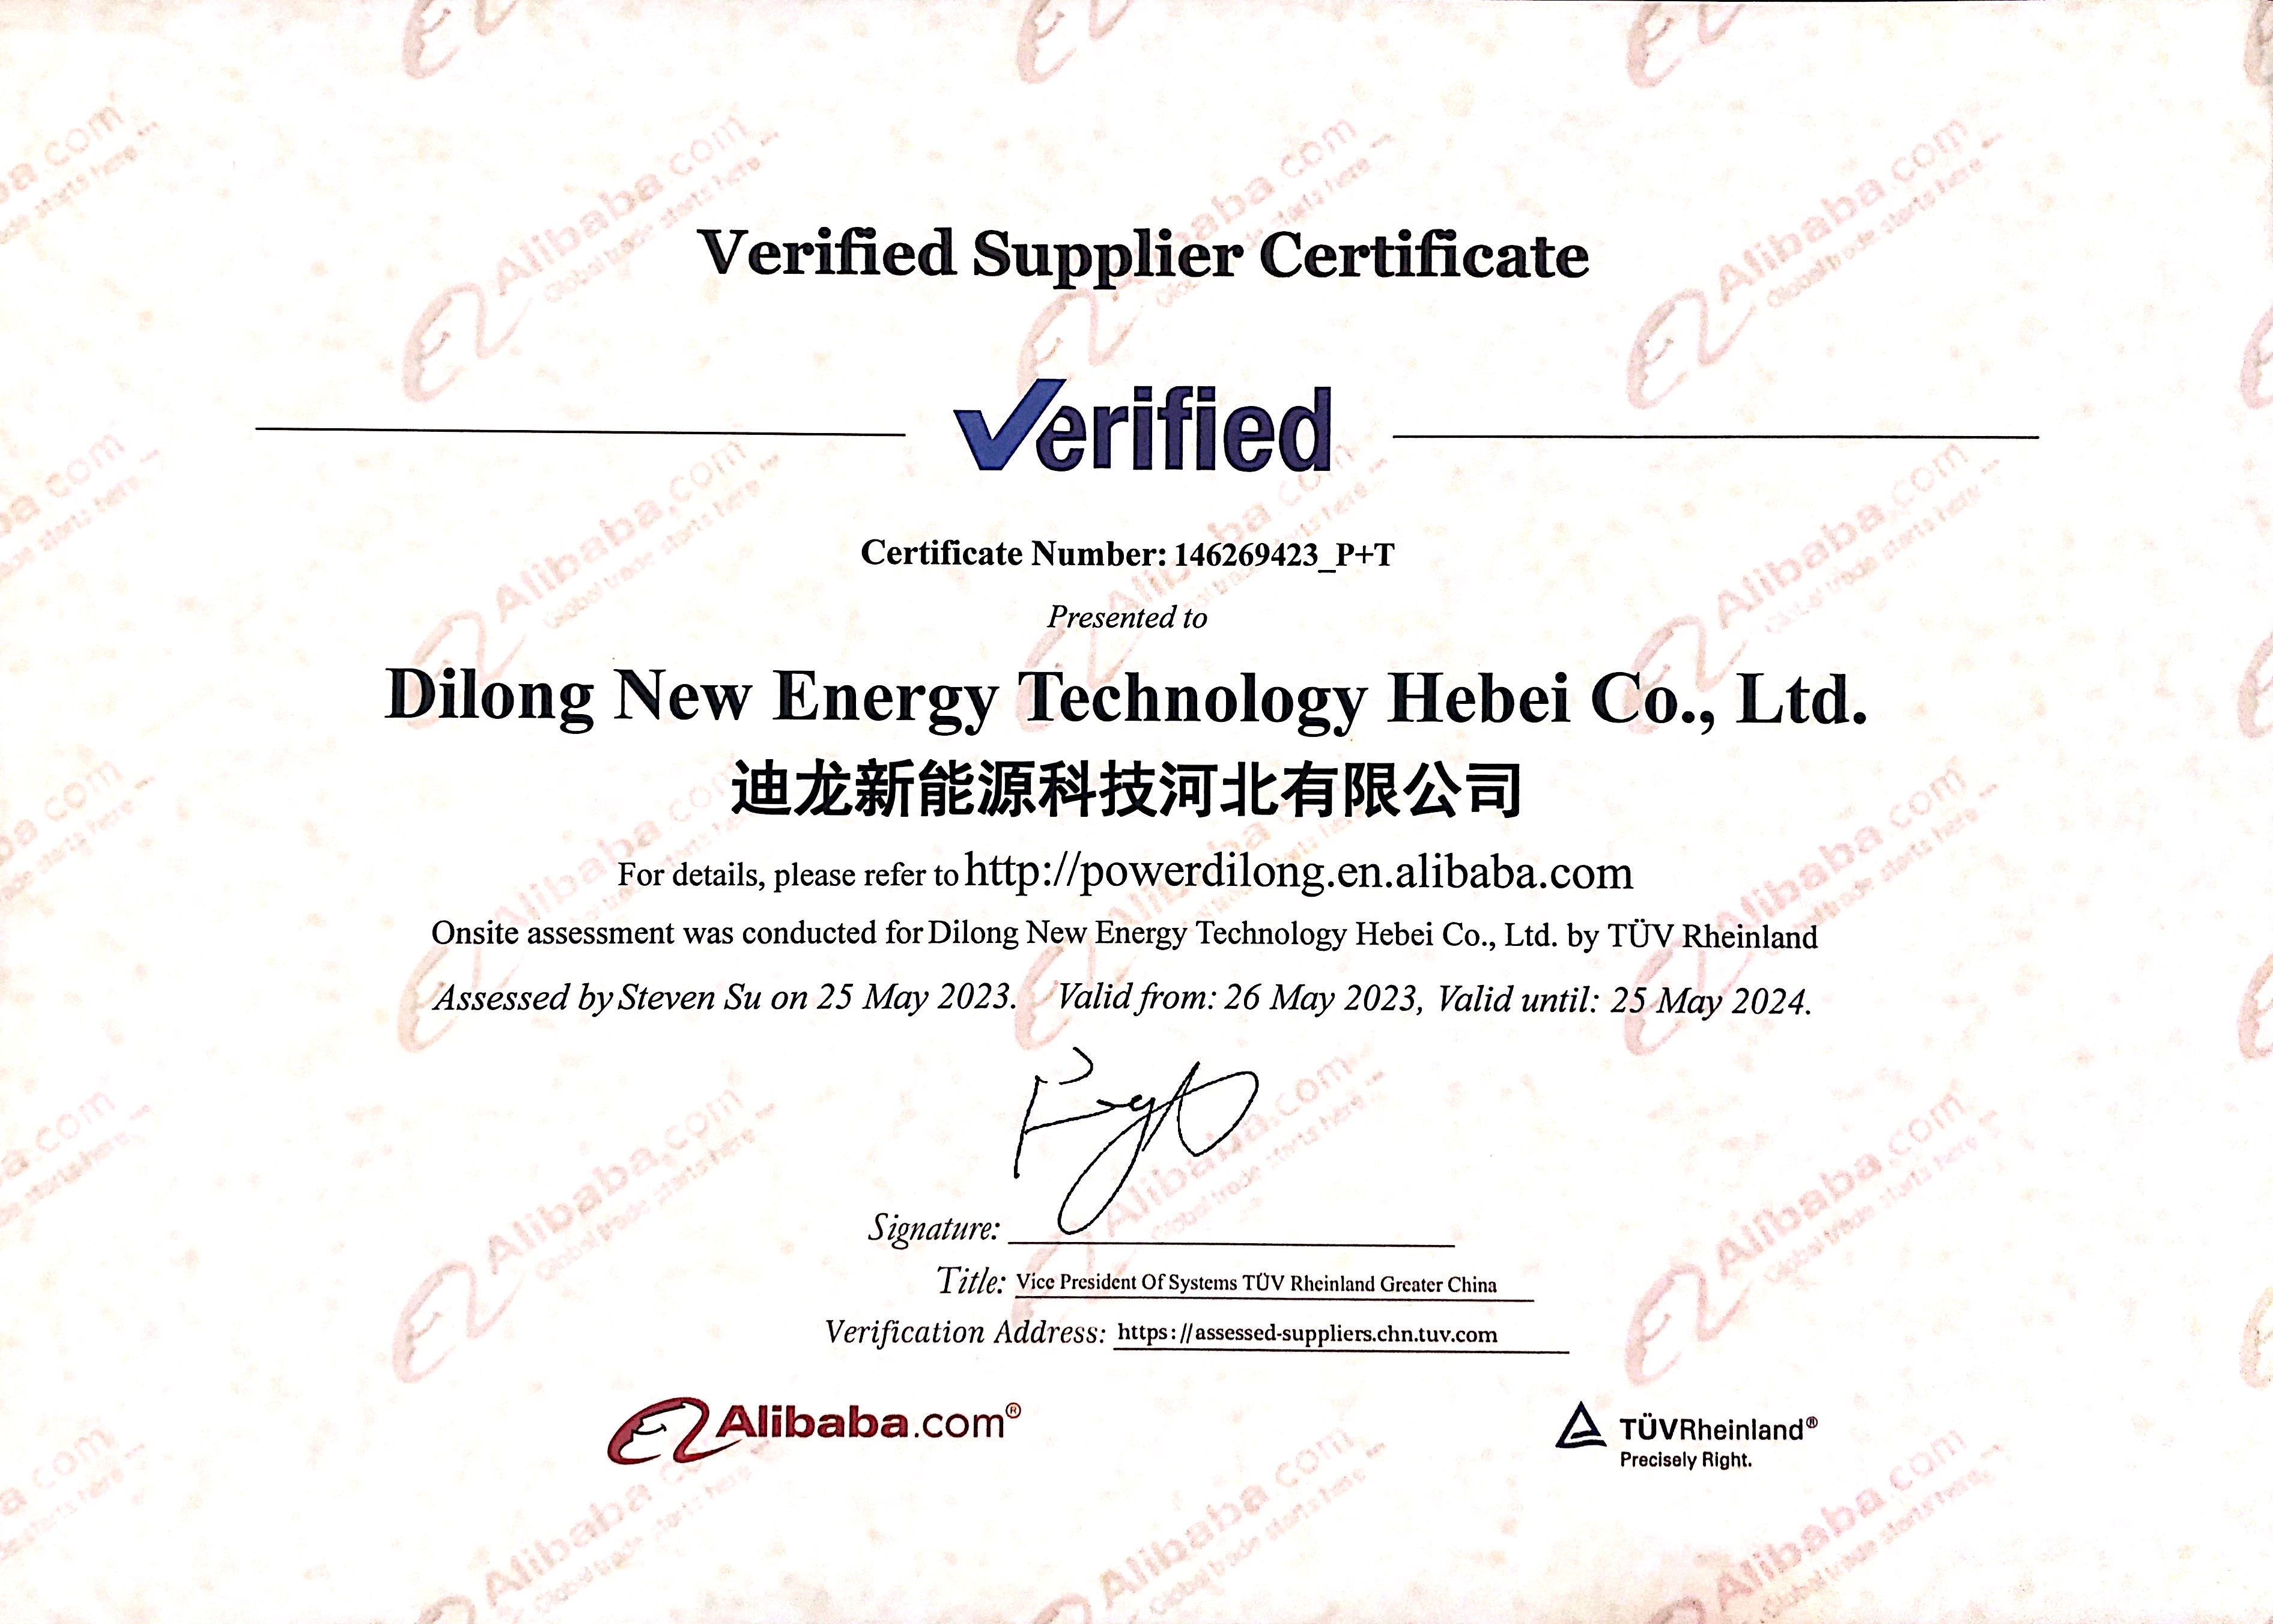 “Dilong Rhine Certification